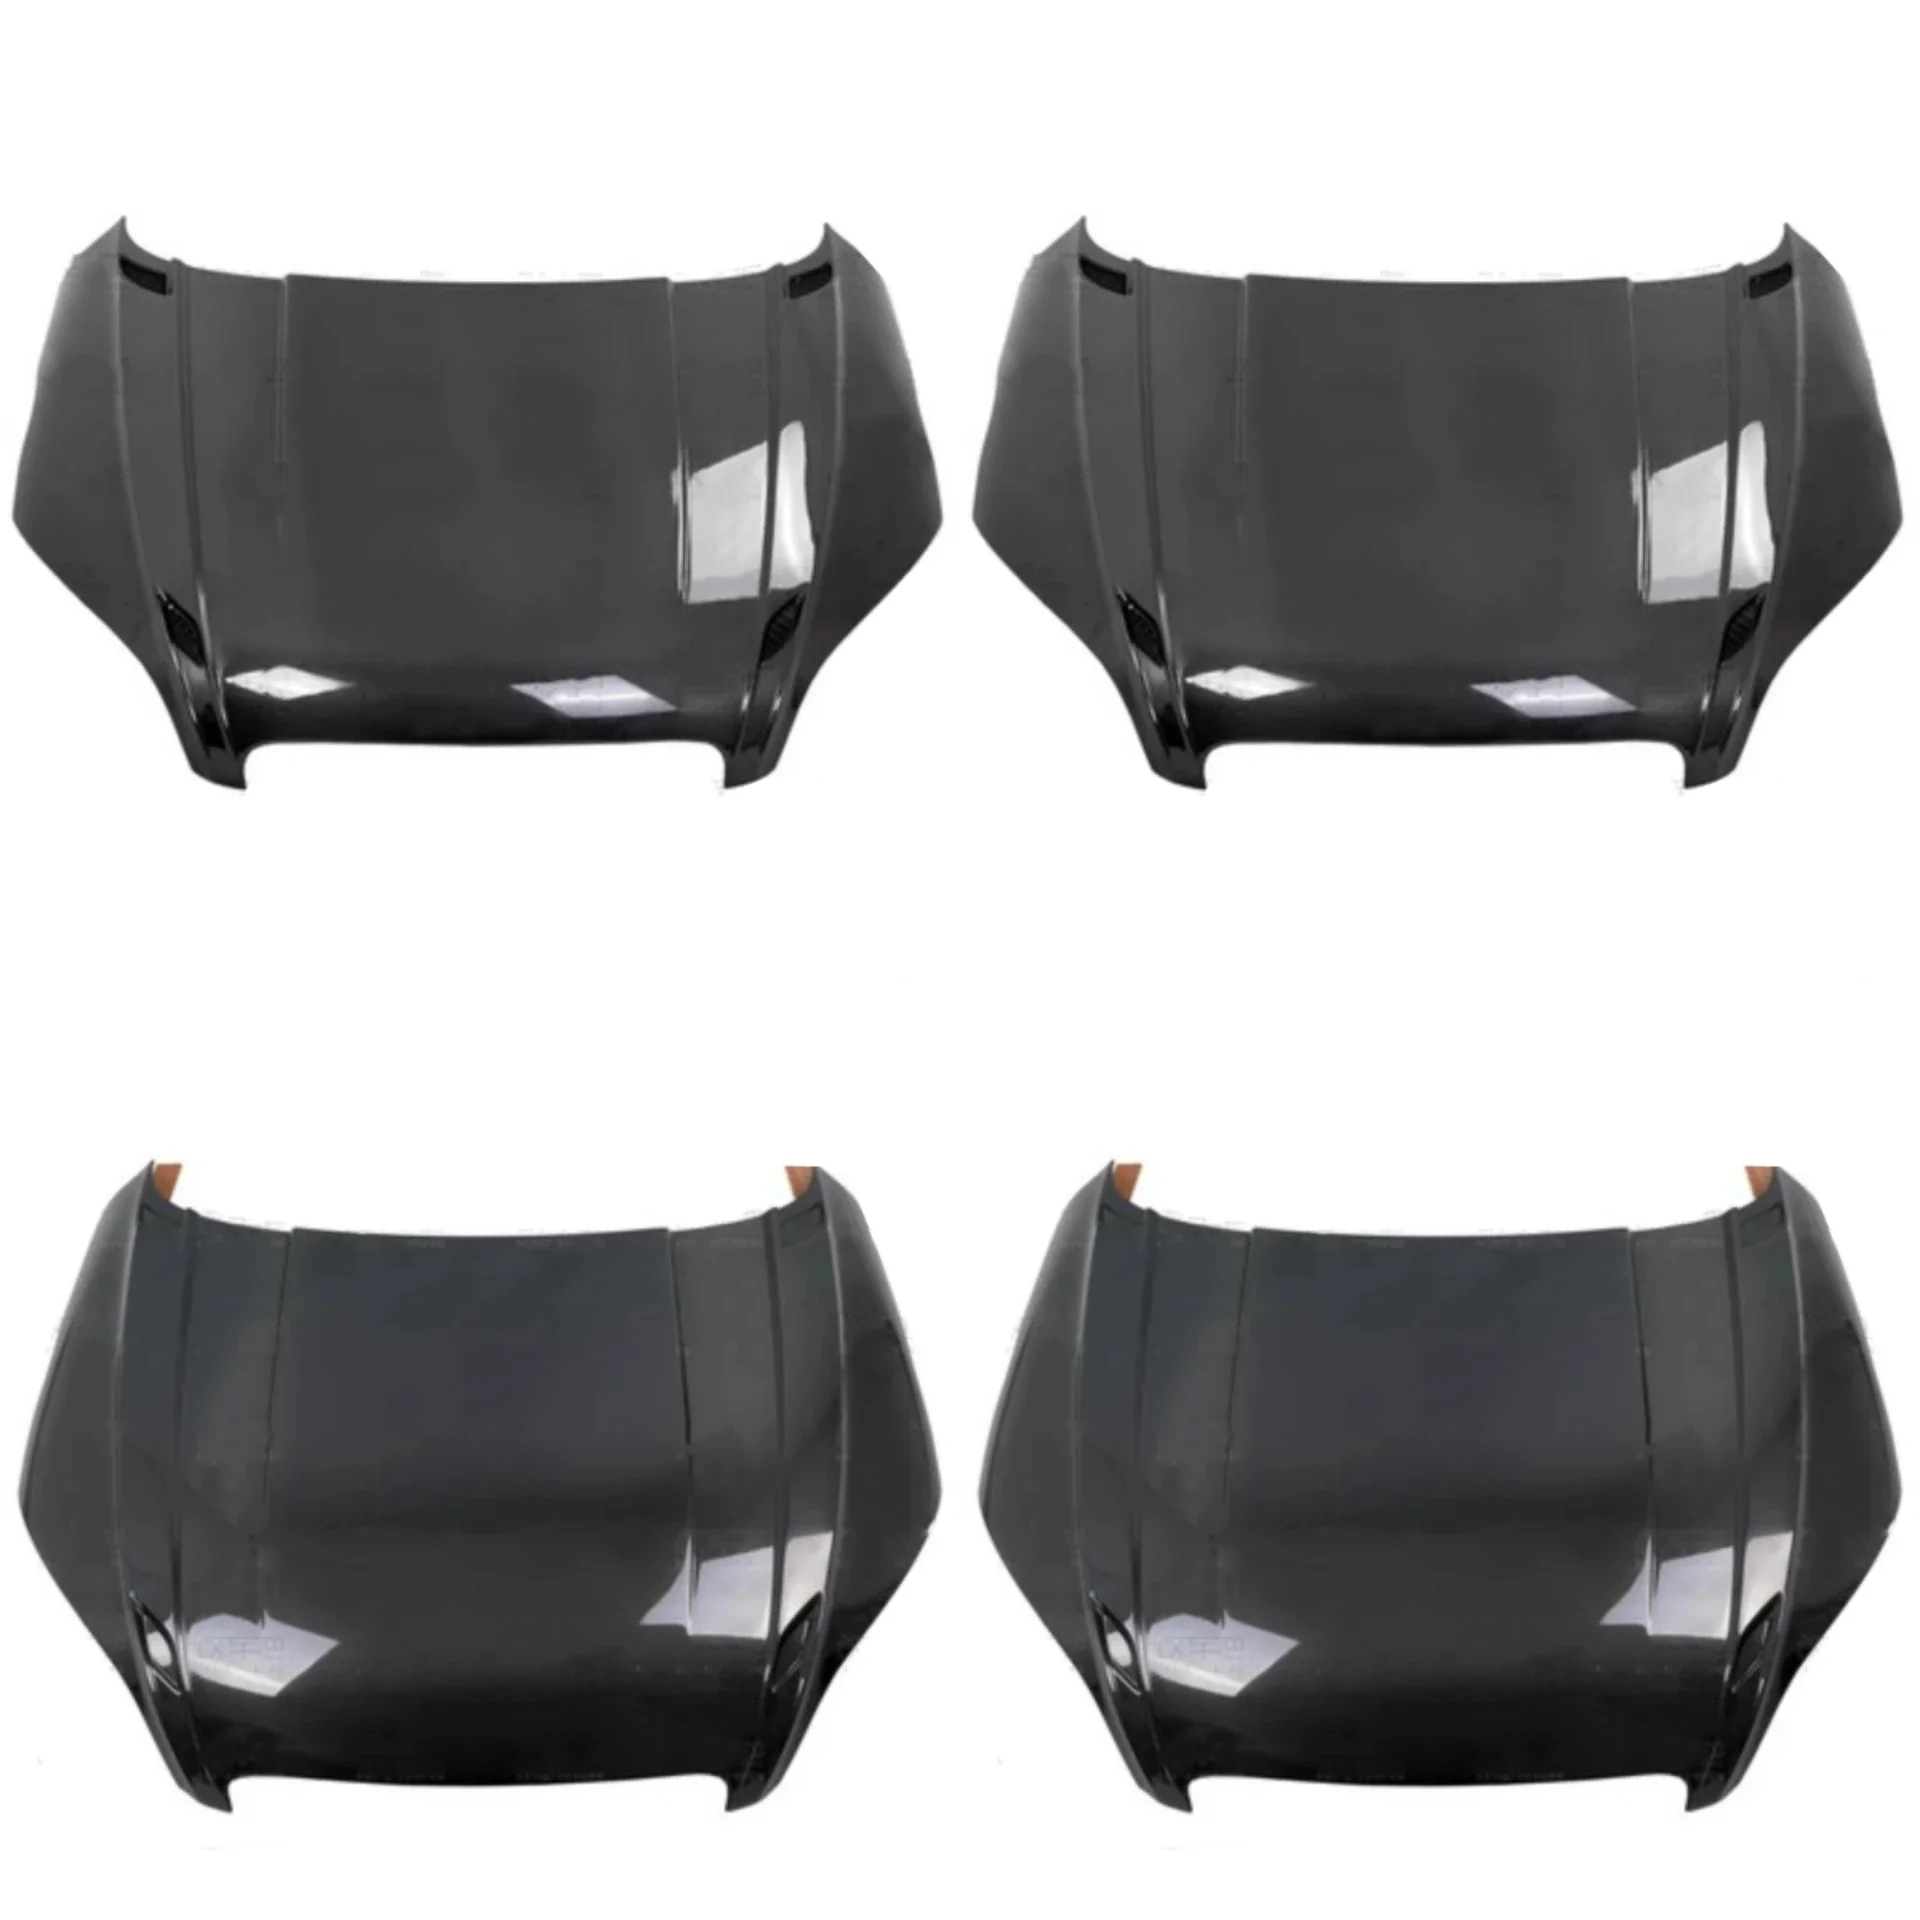 

New Style Carbon Fiber Engine Cover for Audi TT TTRS MK2 2008-2014 Convert Hood Light Weight Bonnet Body Kit Car Accessories